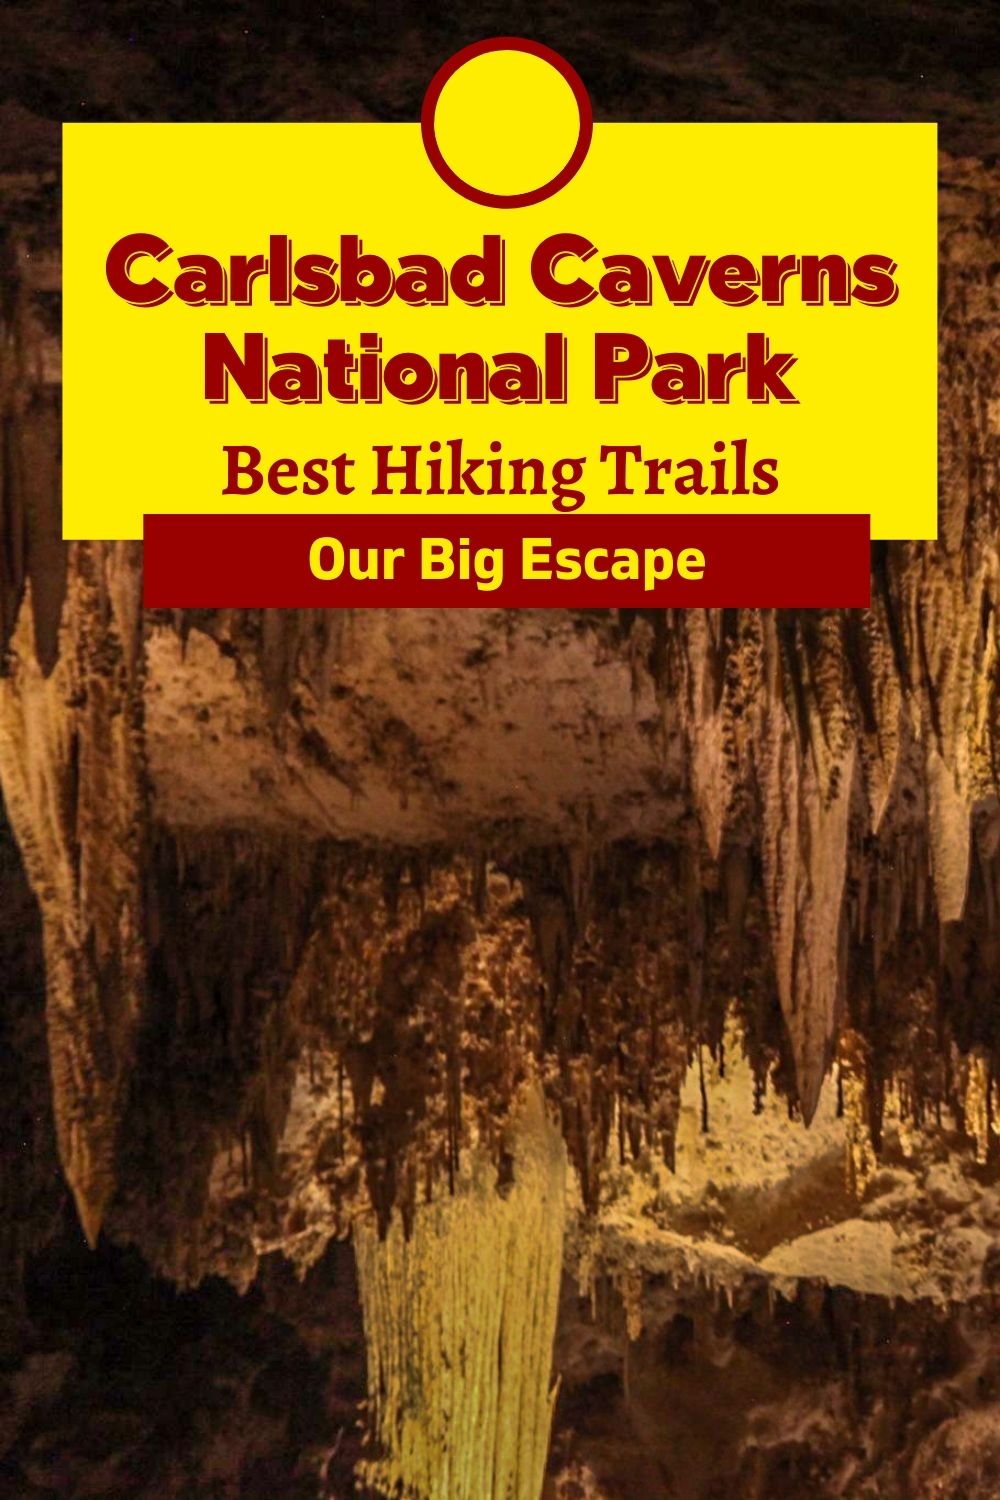 Carlsbad Caverns (9)